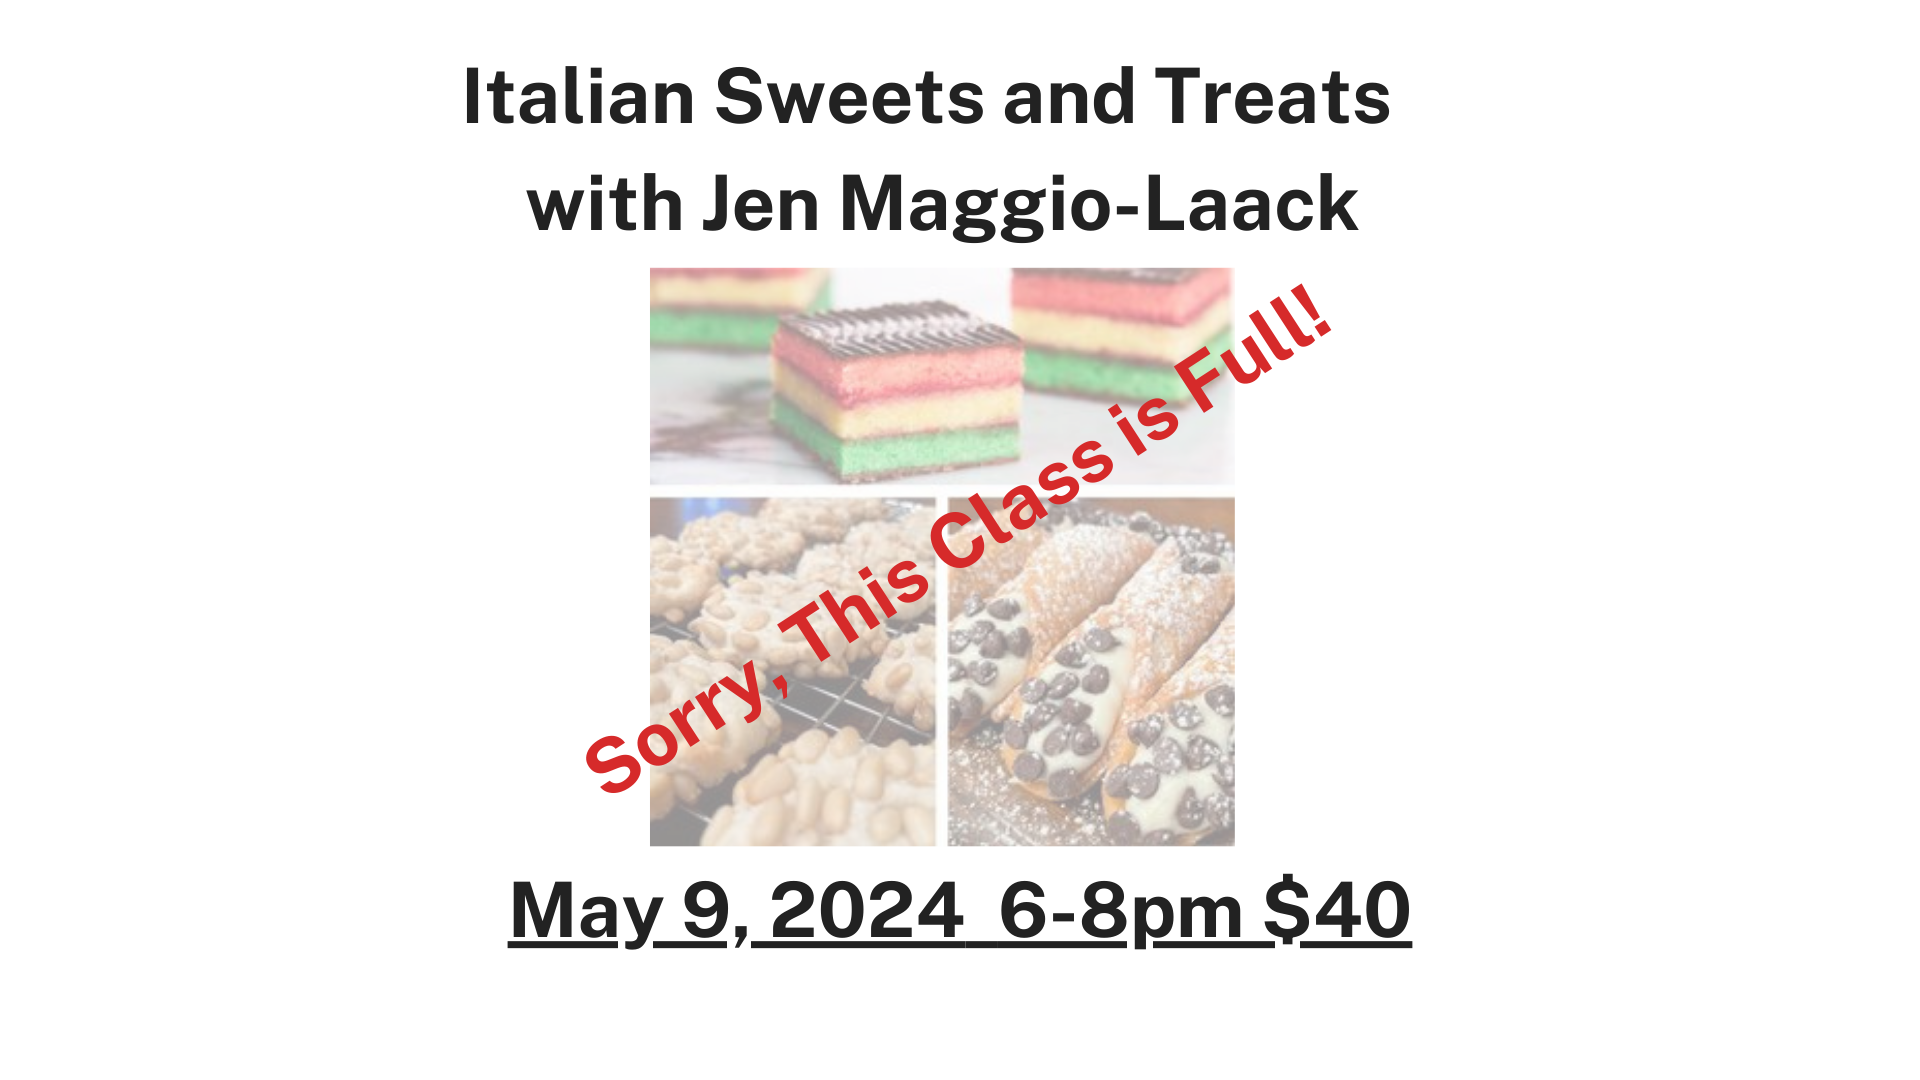 Italian Sweets and Treats with Jen Maggio-Laack May 9, 2024 6-8pm